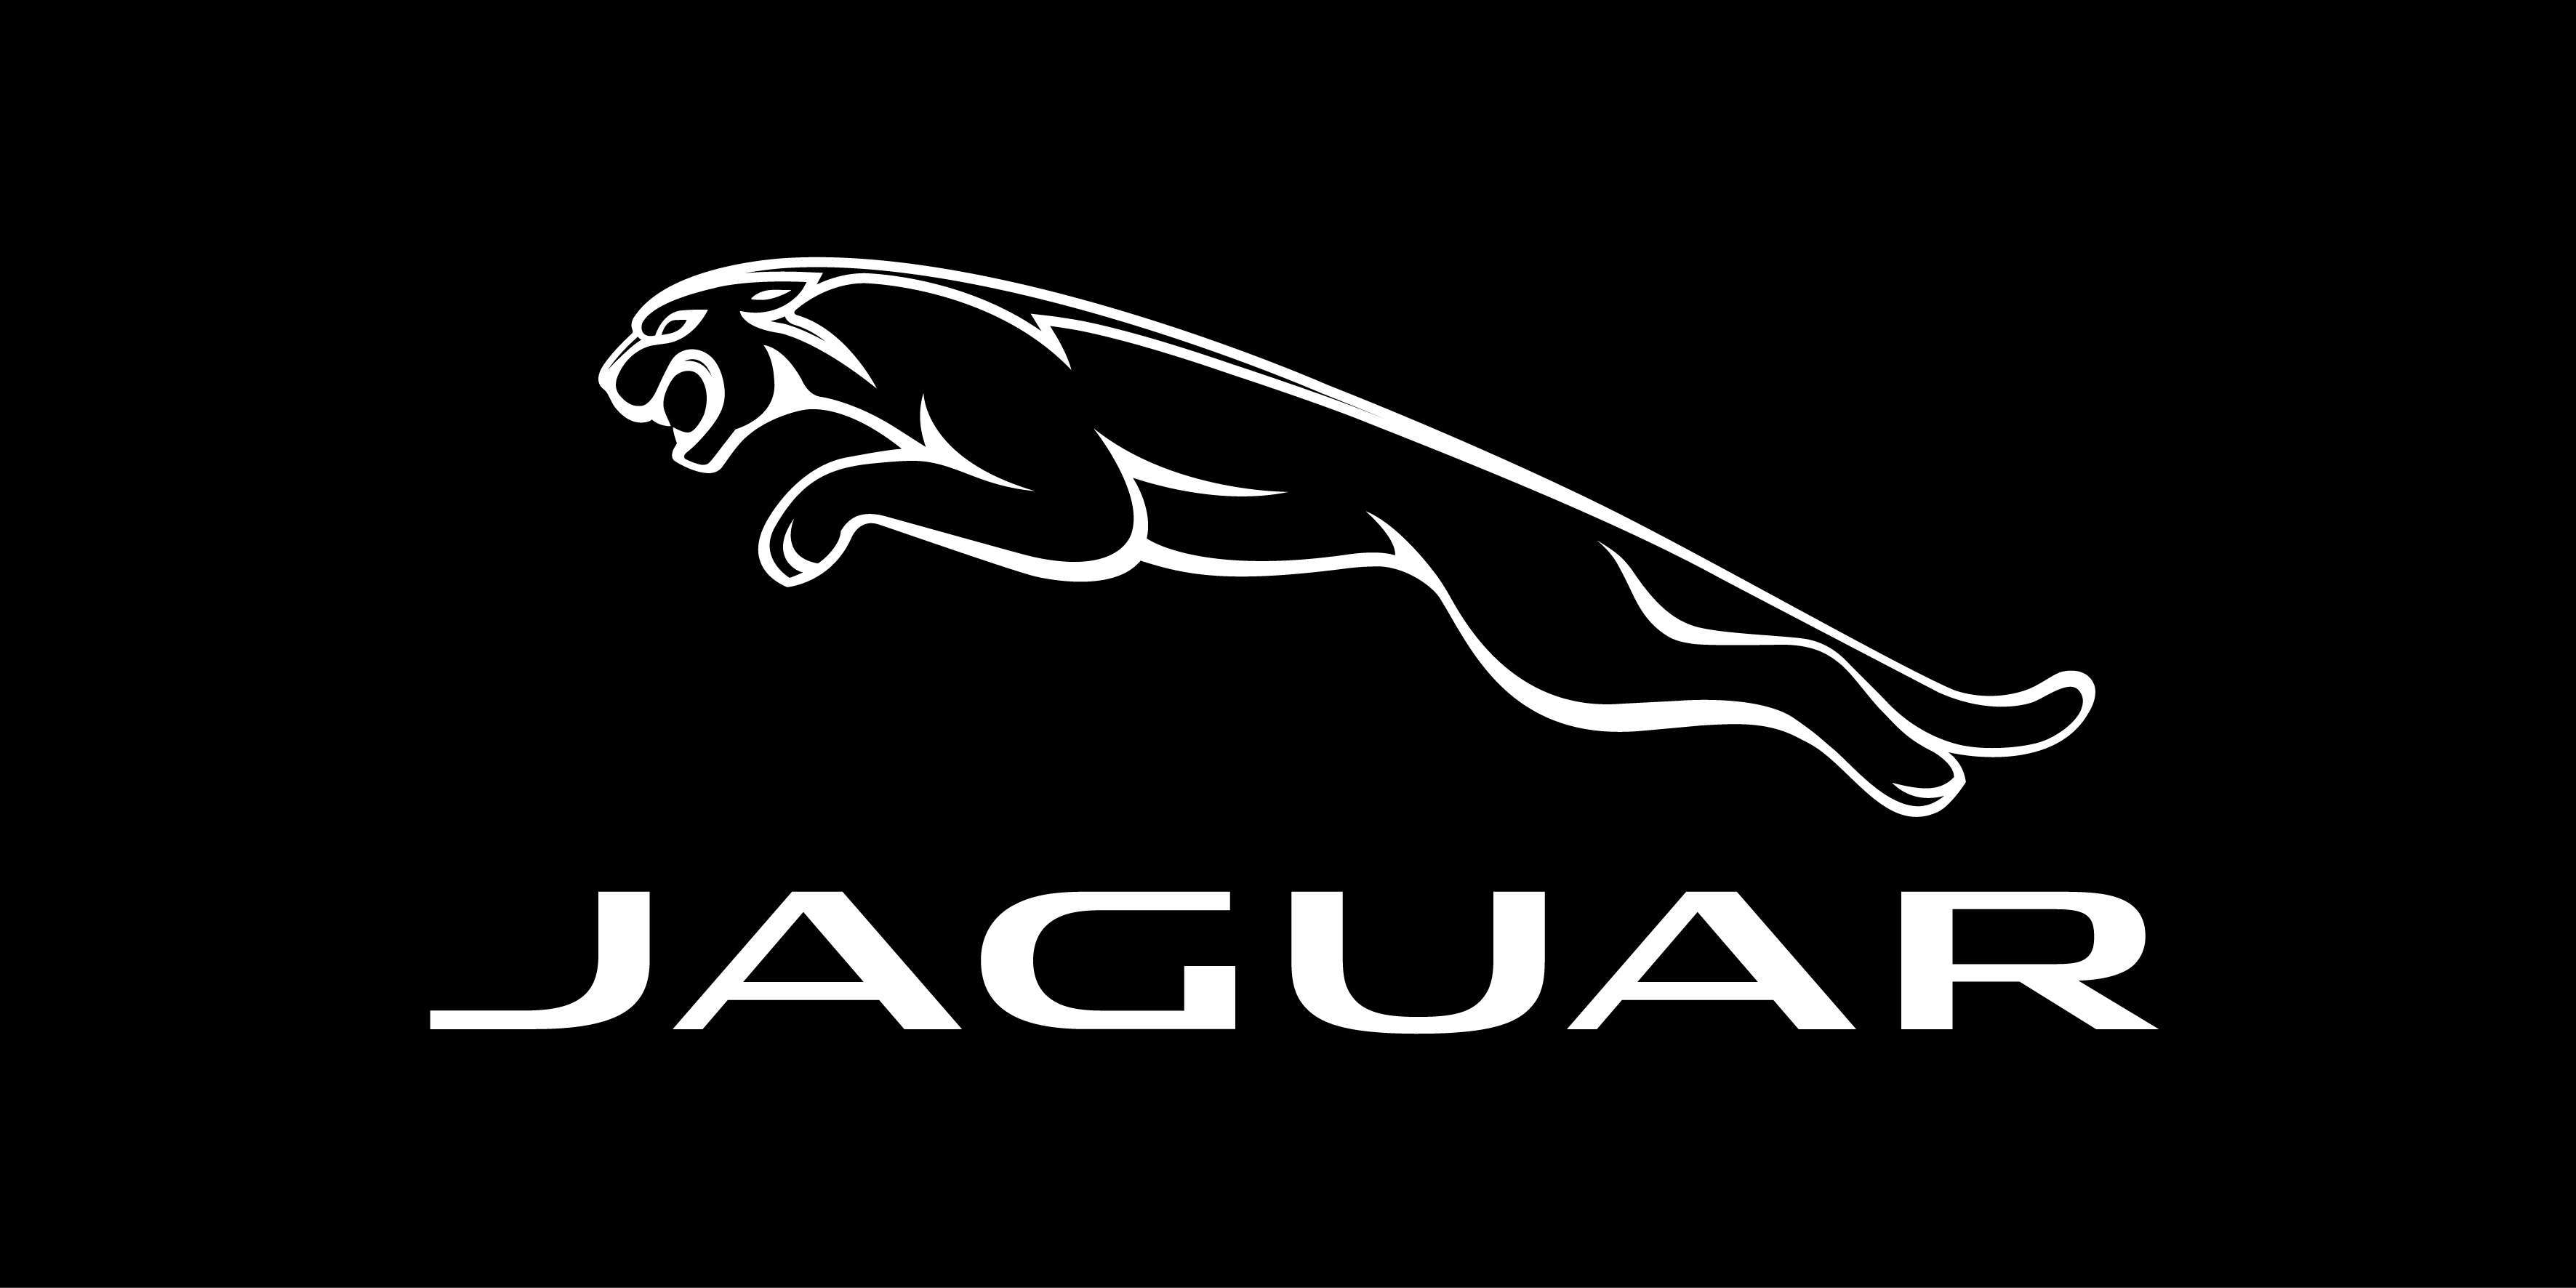 Jaguar Logo Wallpaper Pictures Image